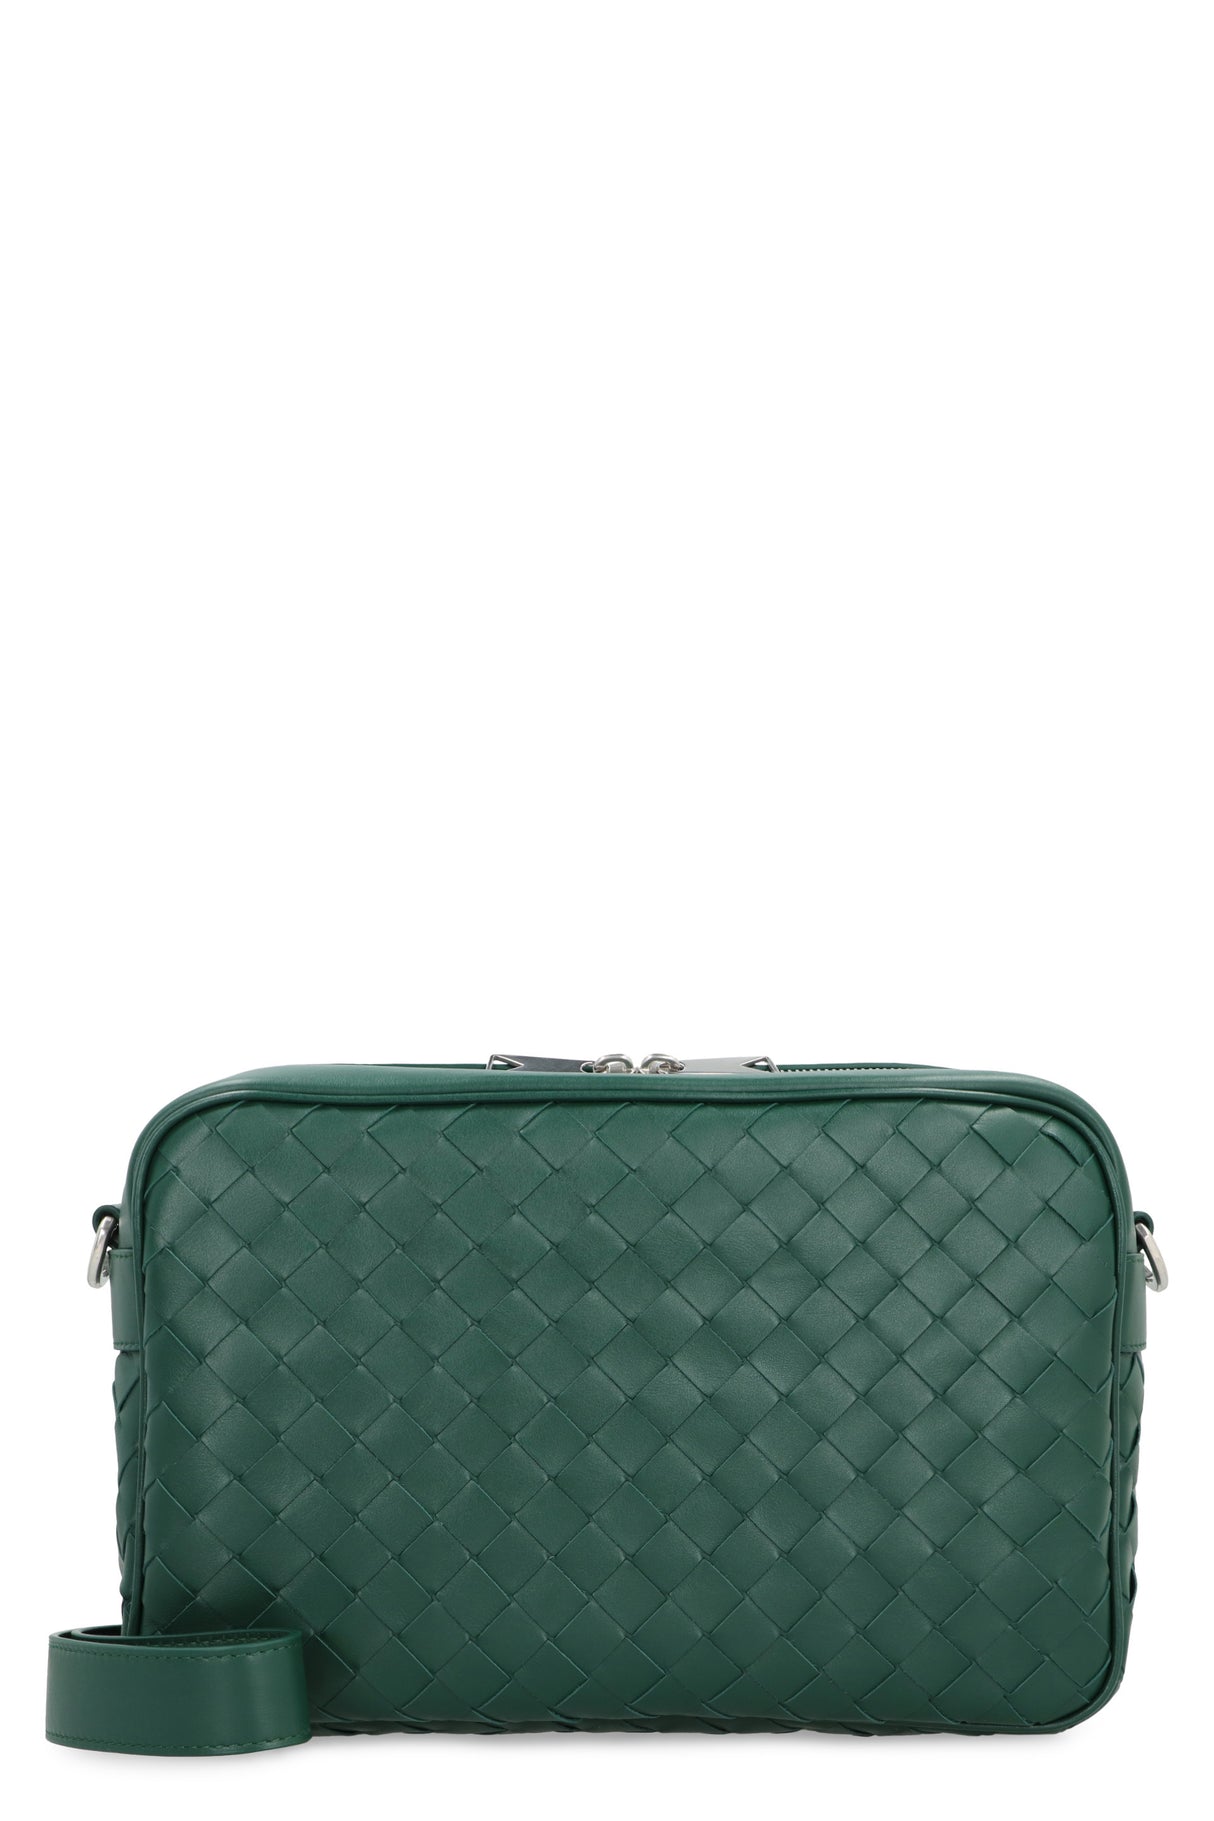 BOTTEGA VENETA Green Intrecciato Leather Camera Handbag for Men